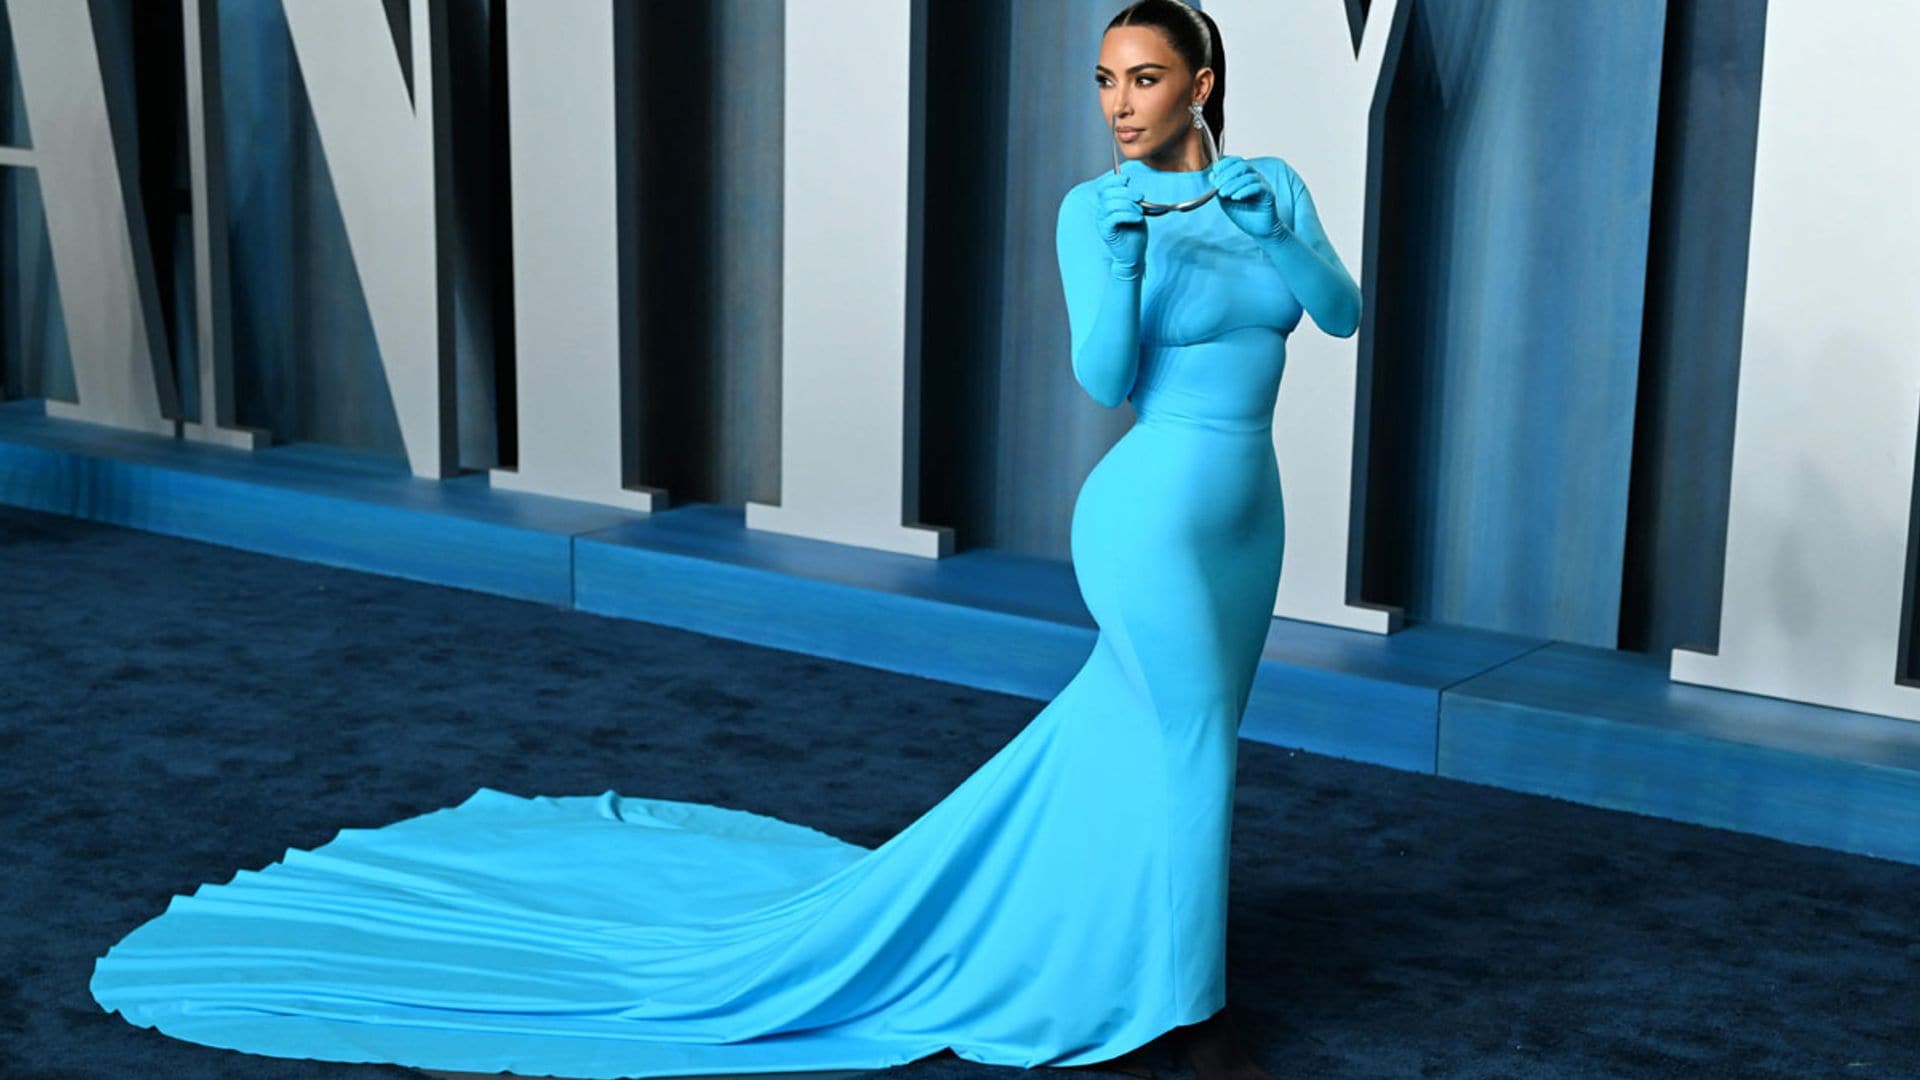 No estás viendo doble, la nueva estilista de Kim Kardashian parece su clon